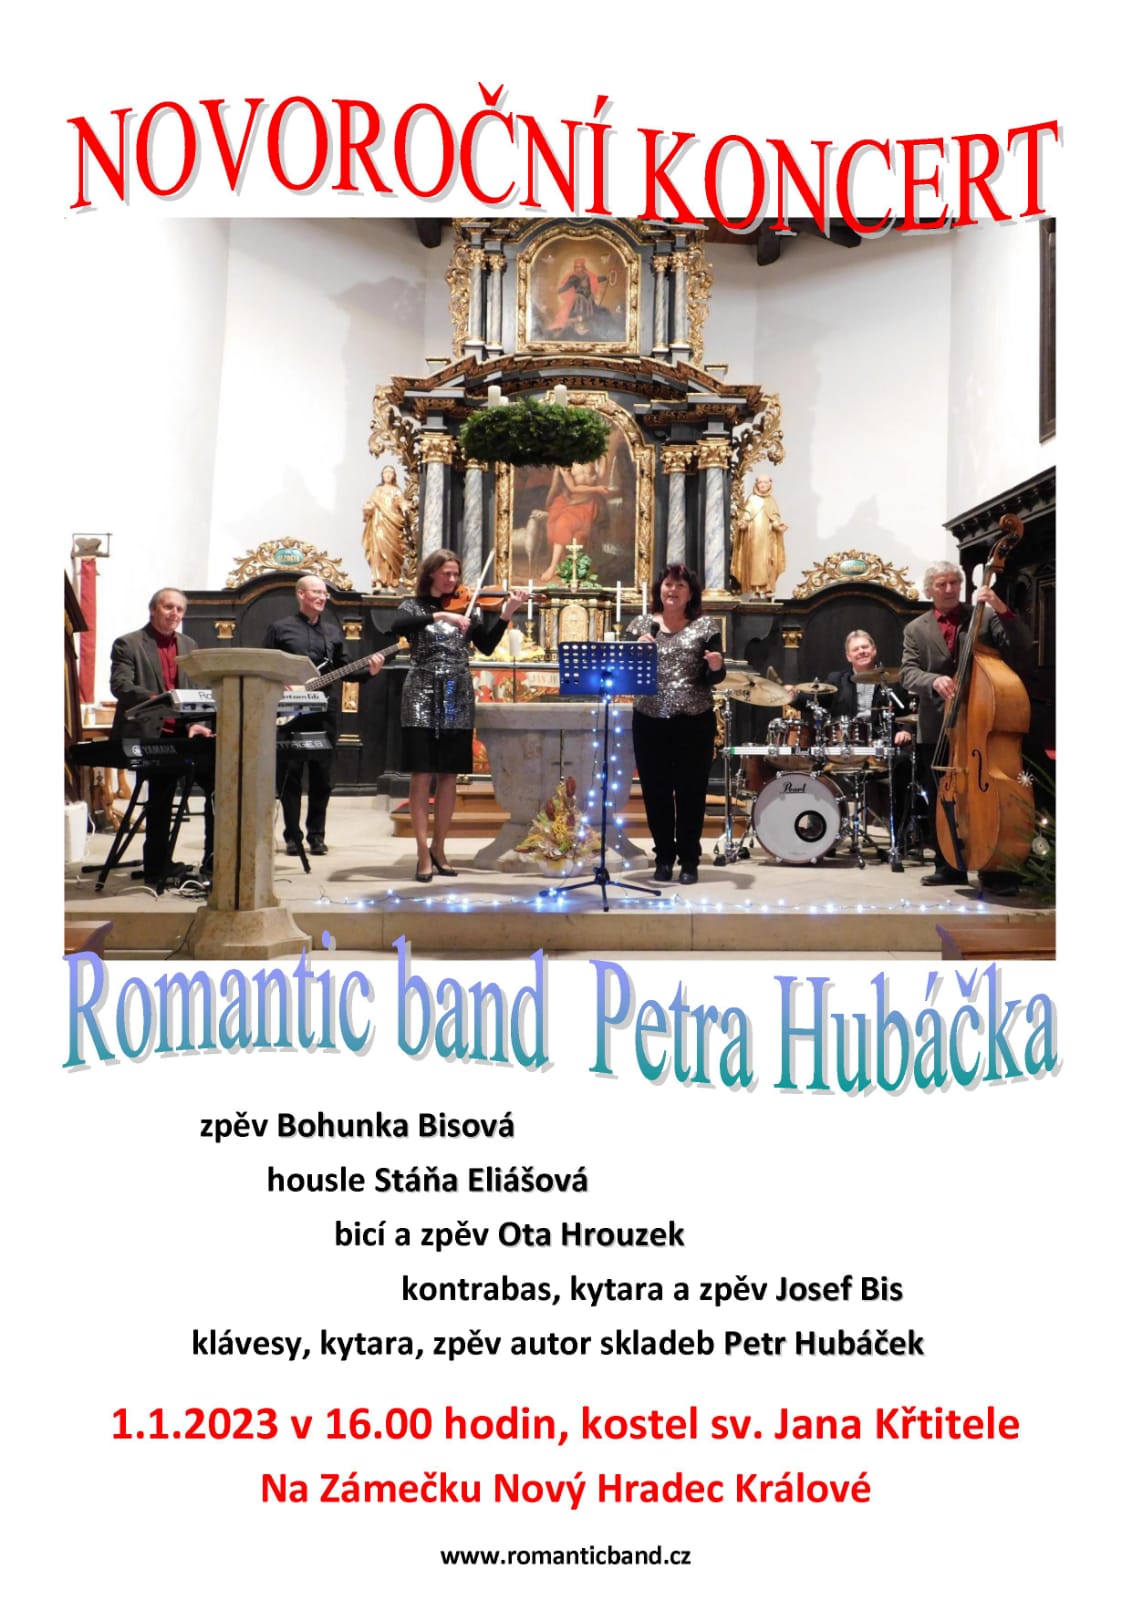 Romantic band Petra Hubáčka